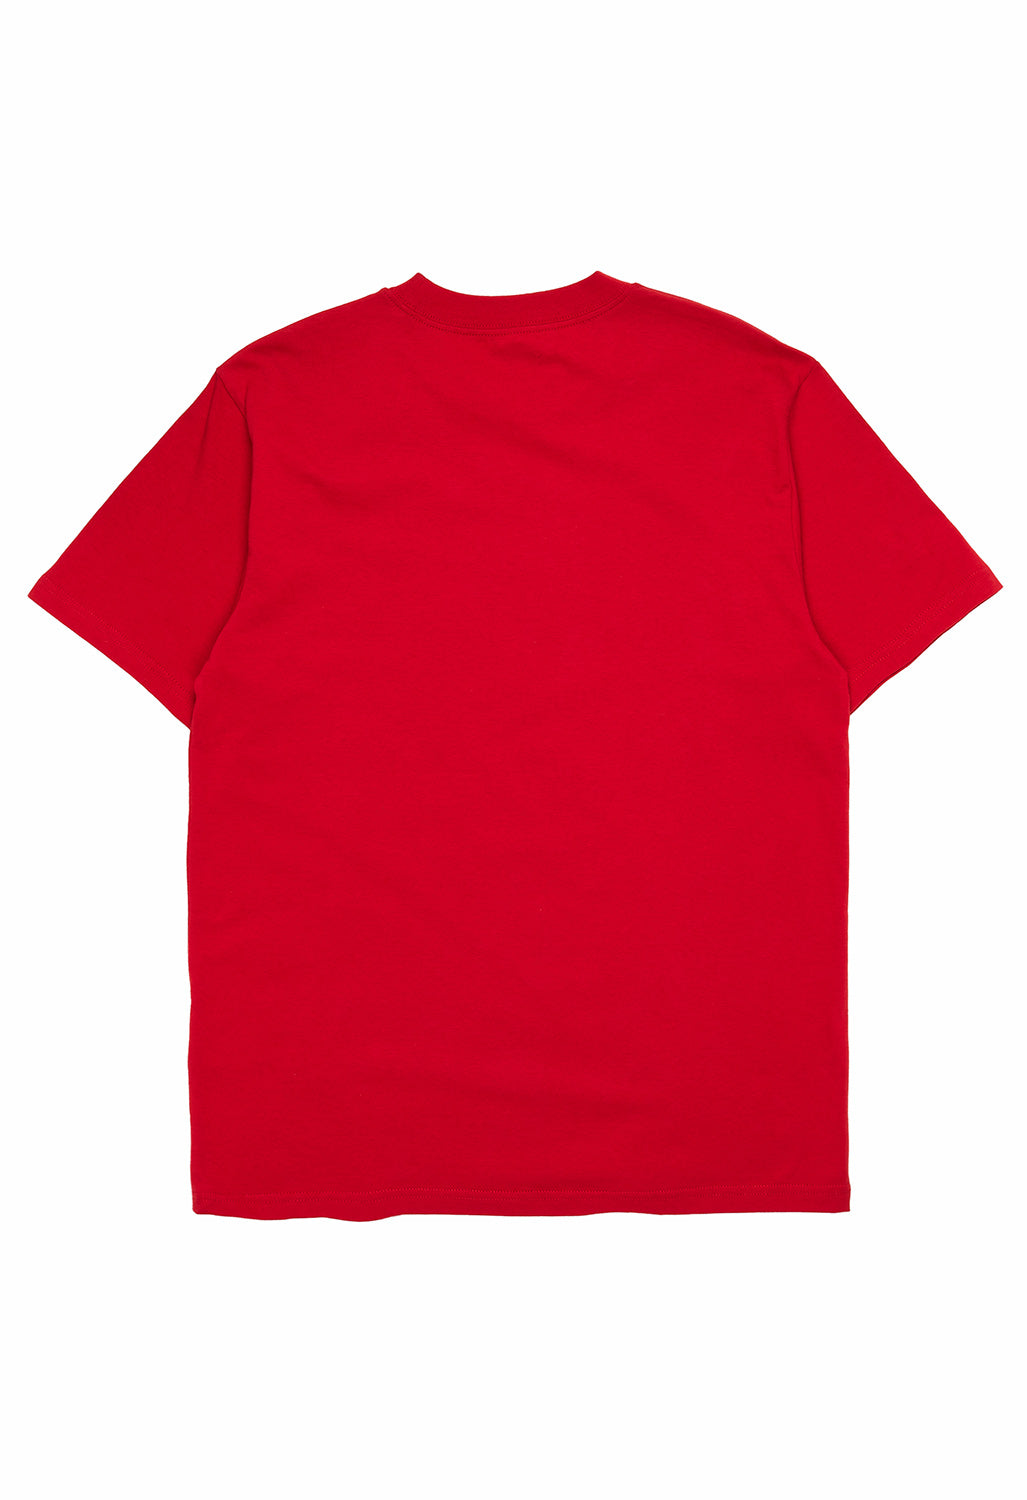 Carhartt WIP Men's Mountain College T-Shirt - Cherry